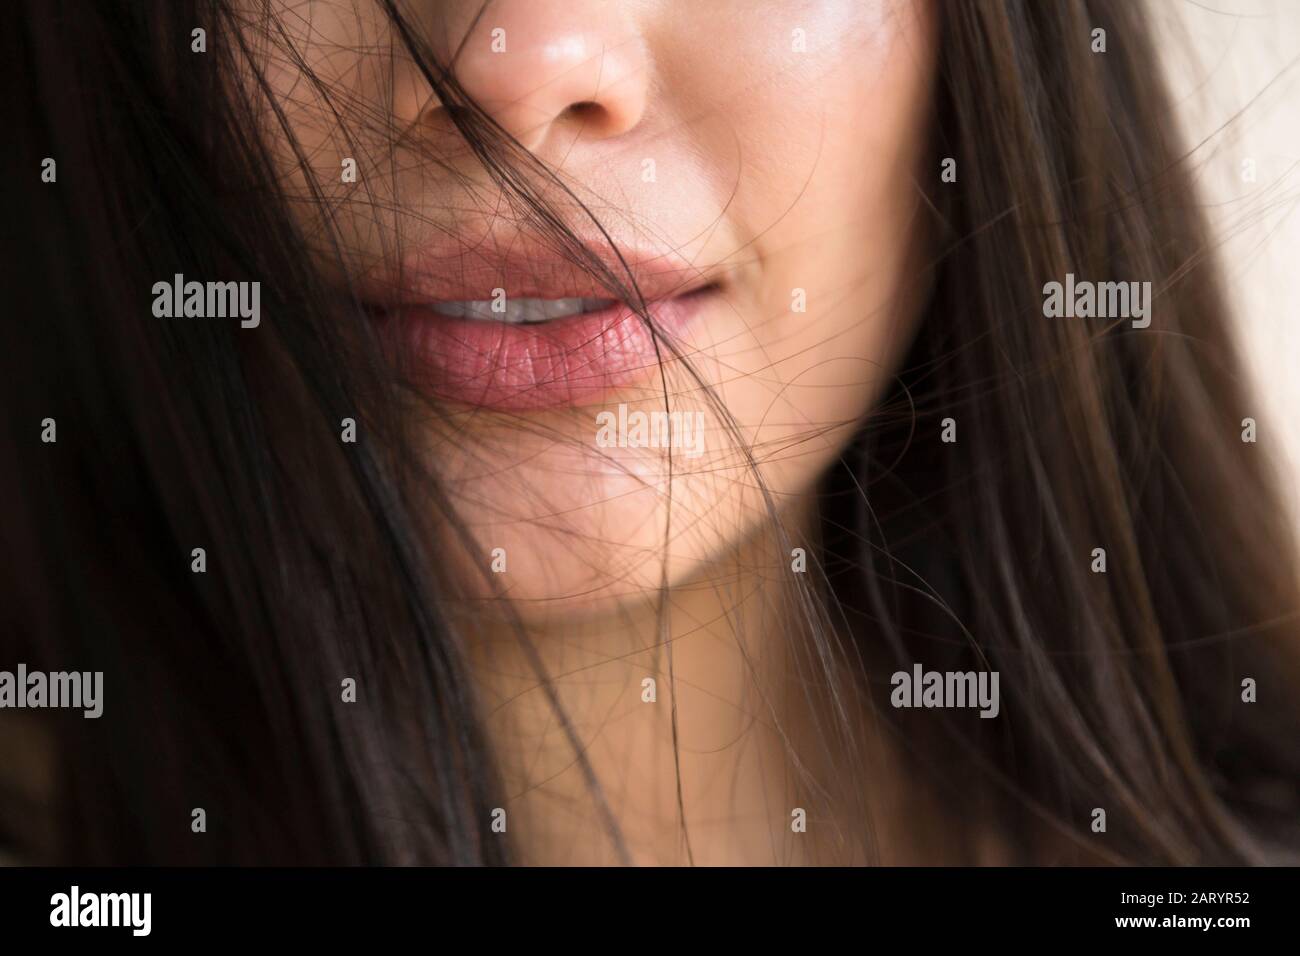 Close up of woman's face Banque D'Images